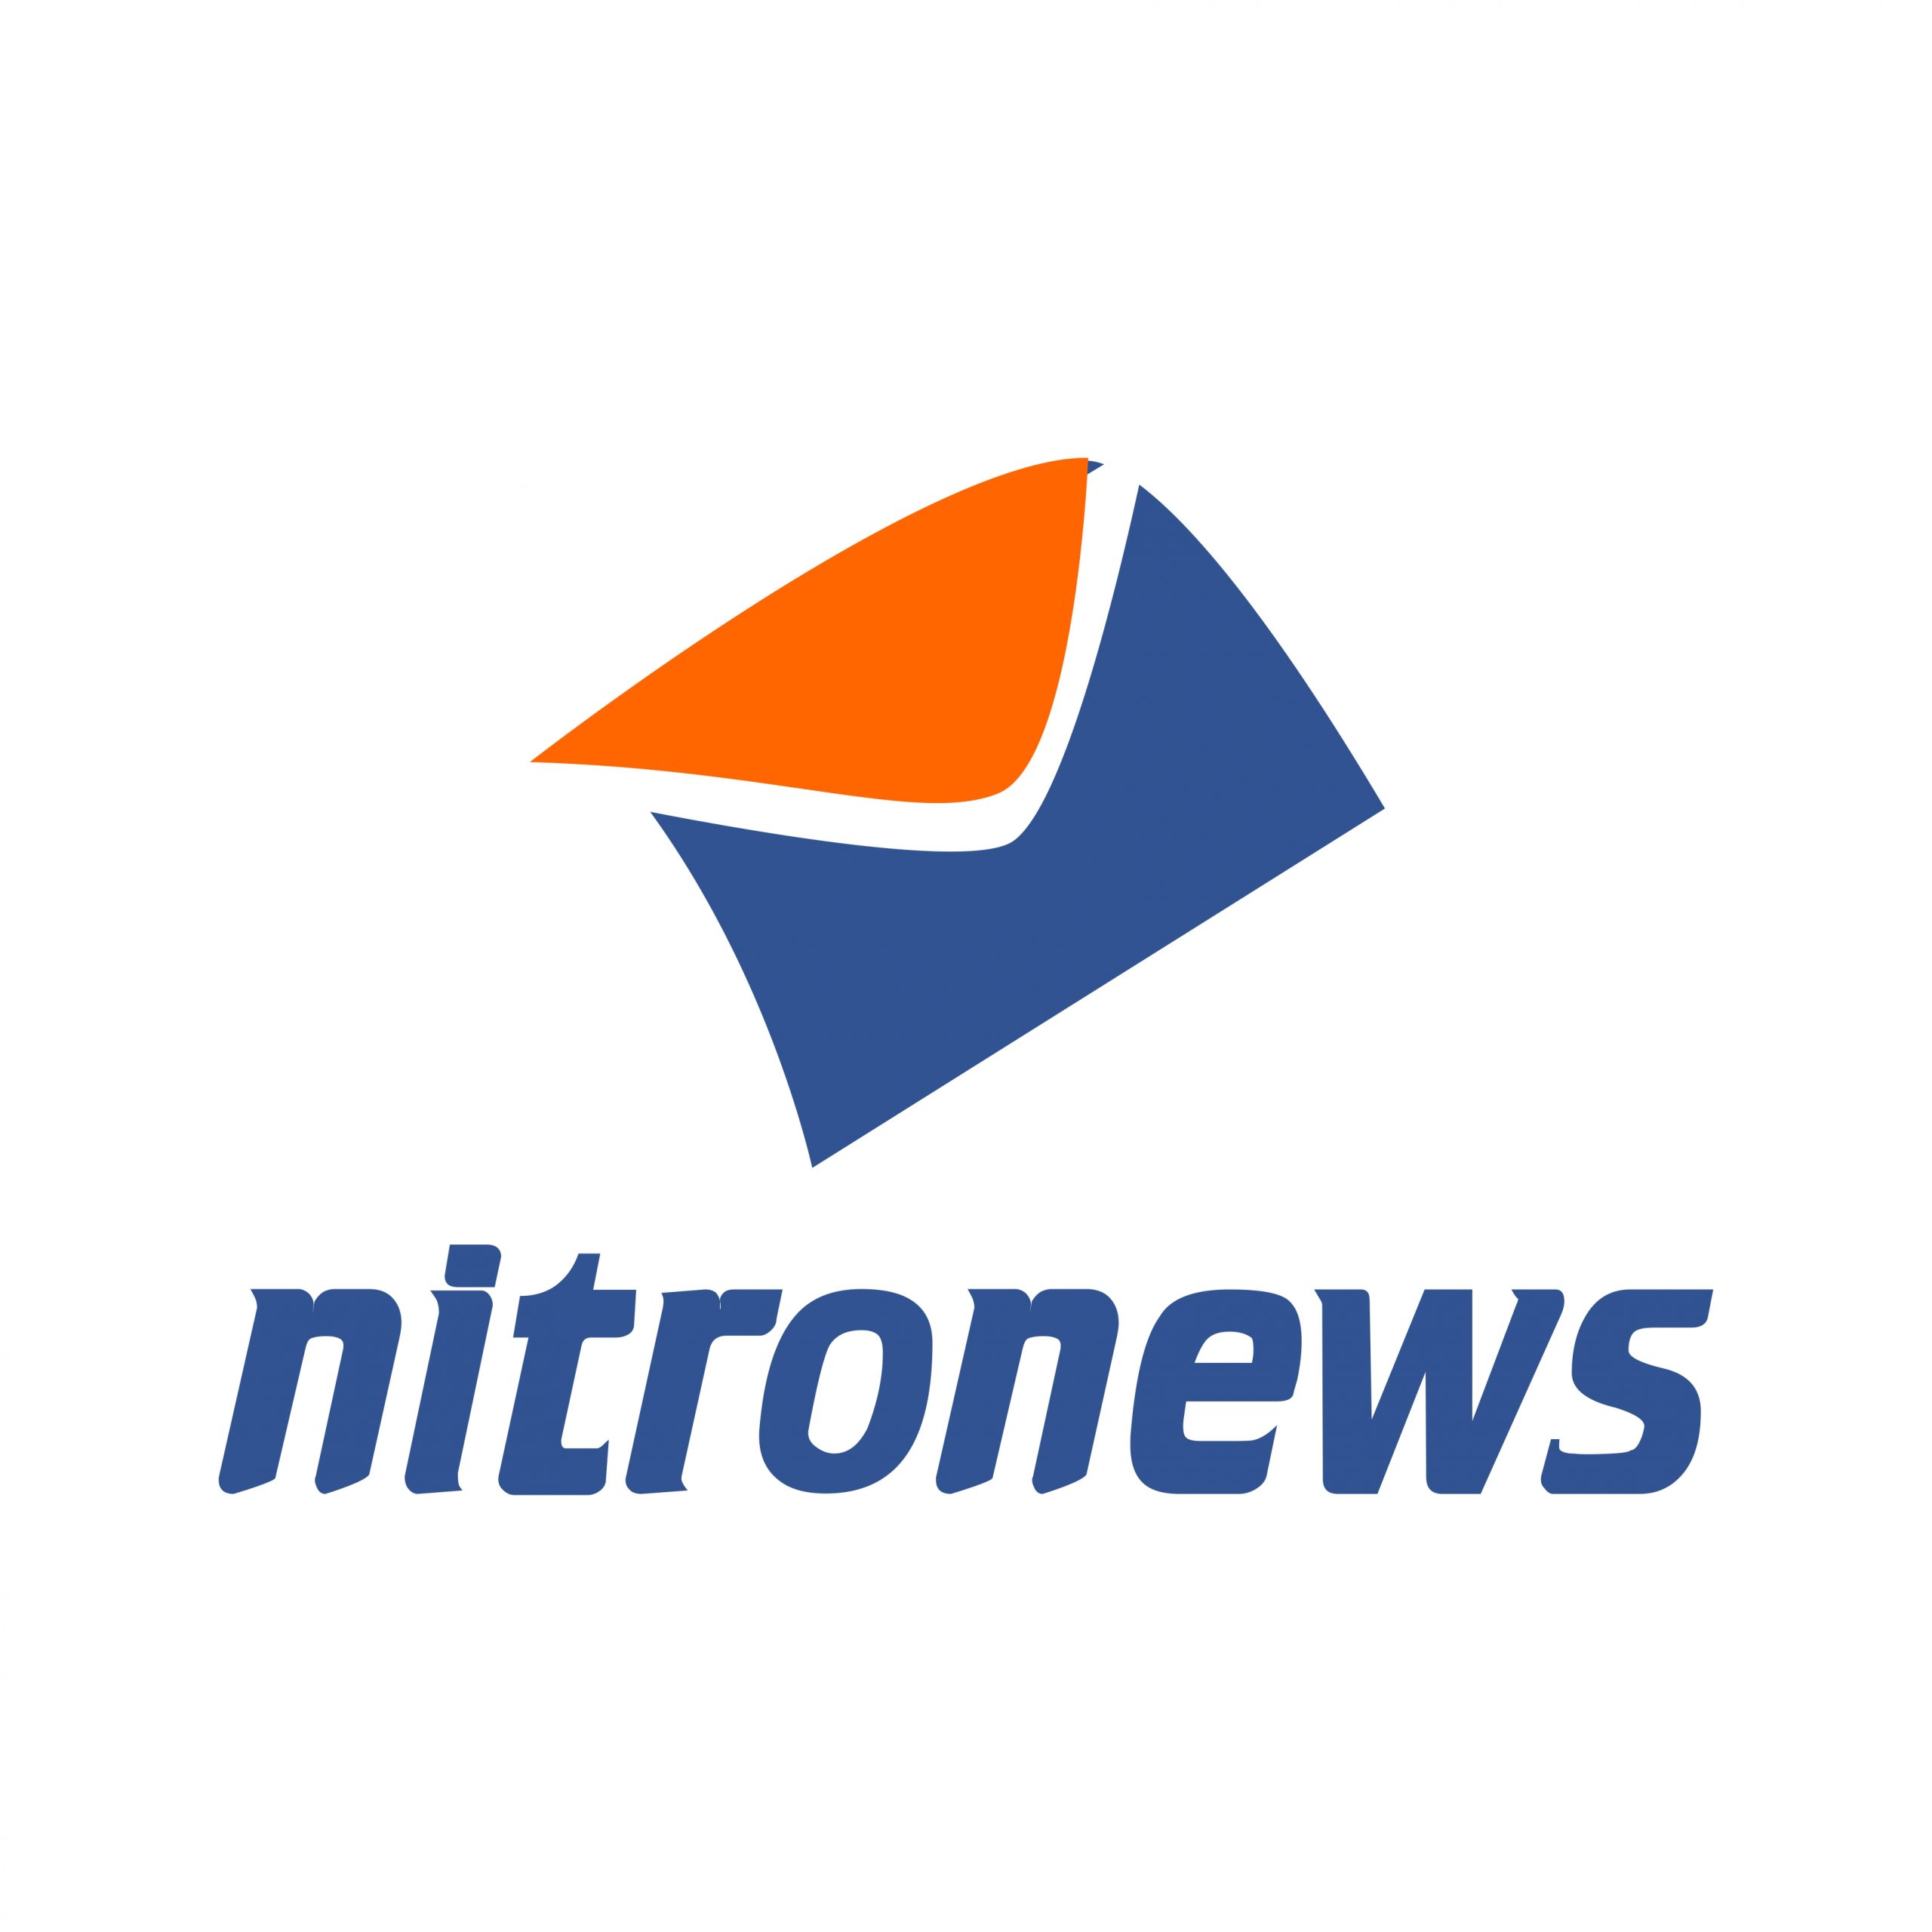 Nitronews